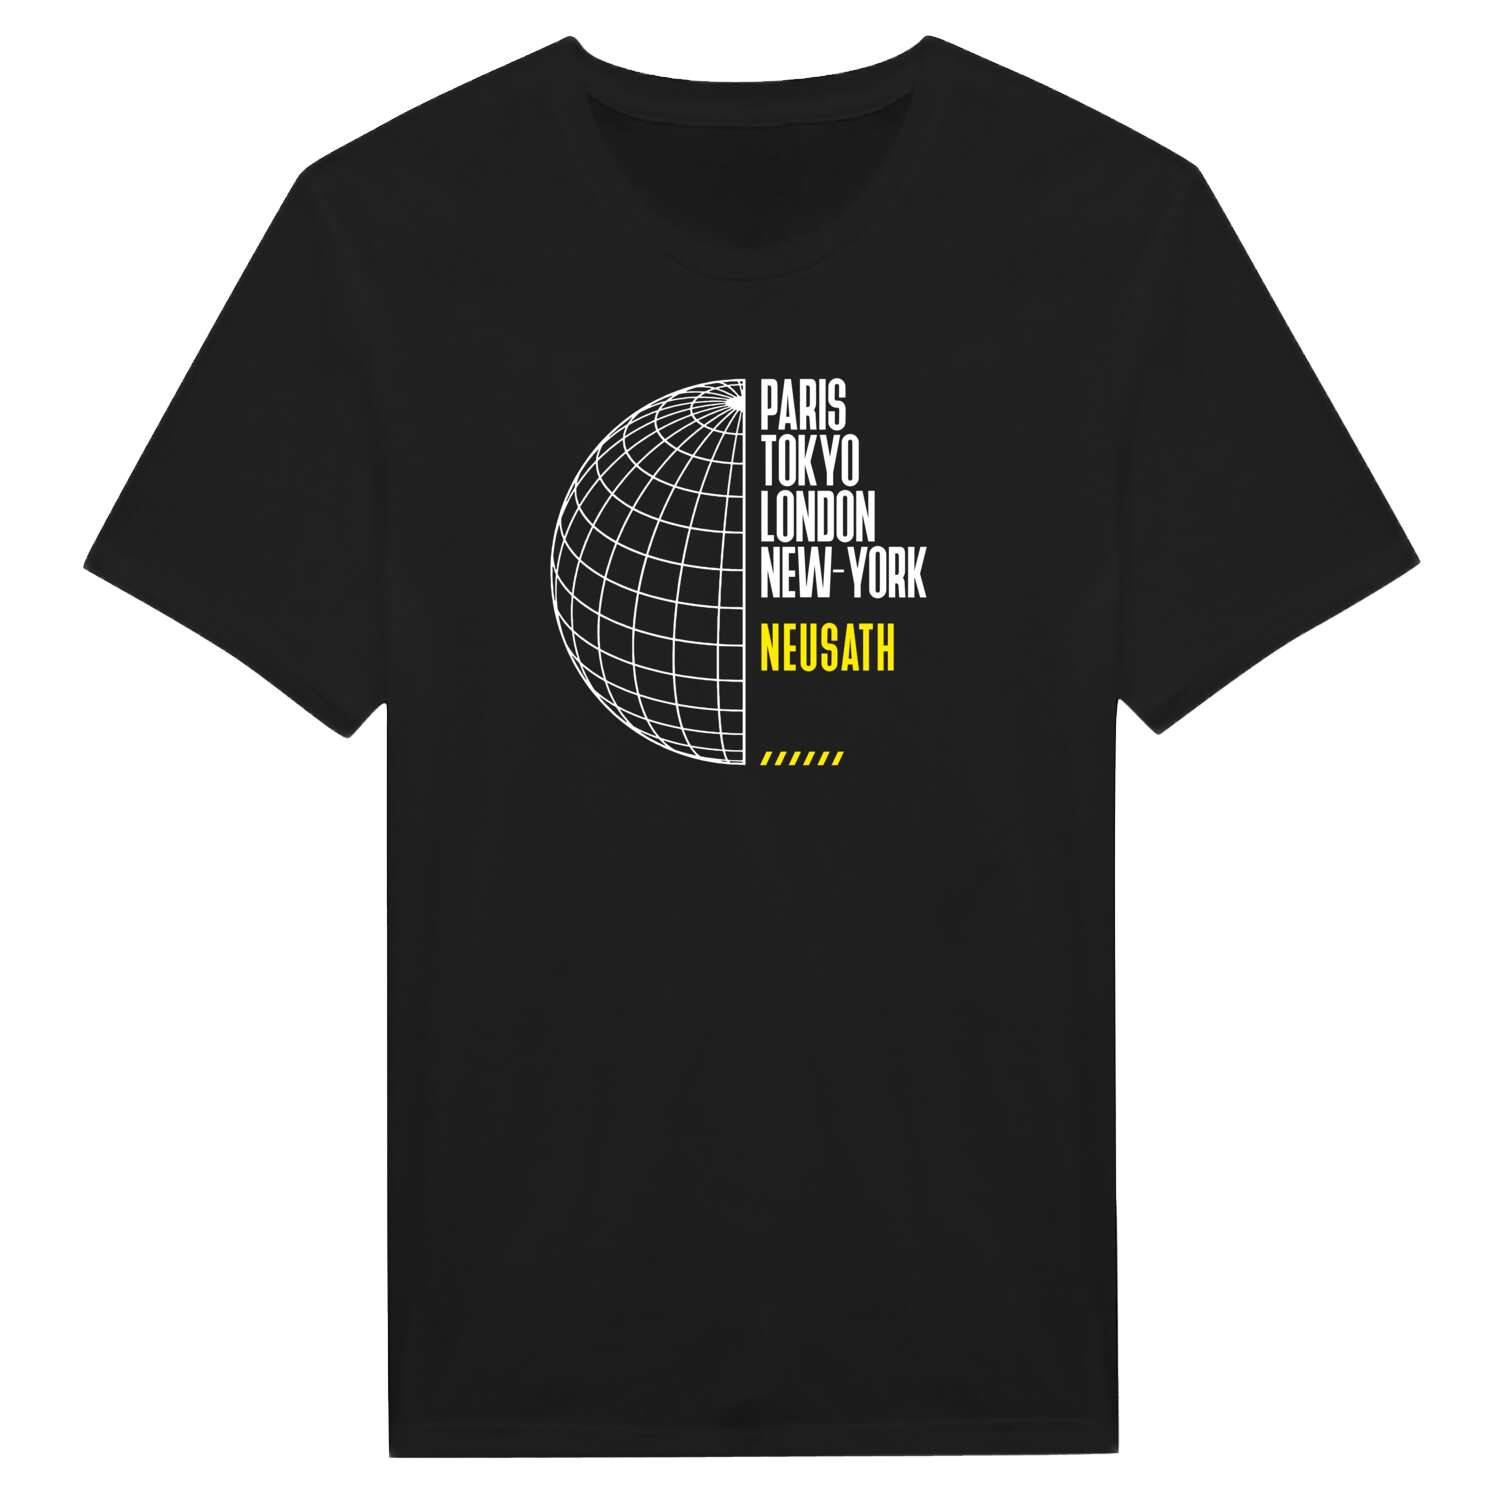 Neusath T-Shirt »Paris Tokyo London«